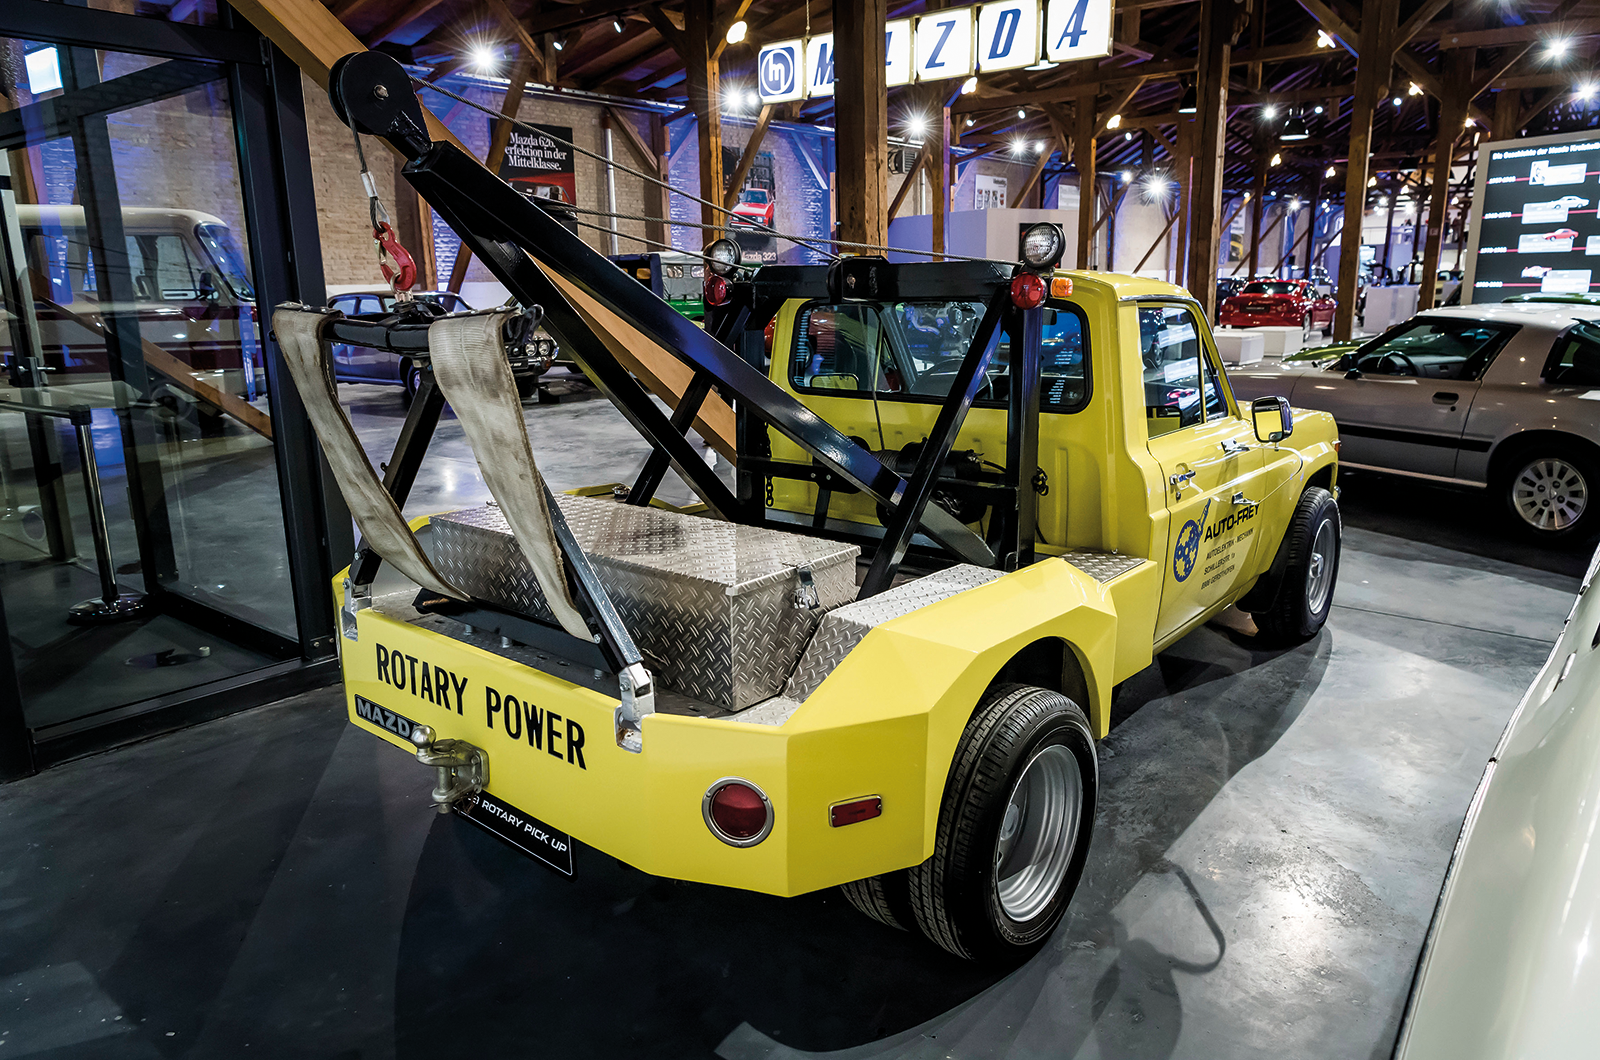 Classic & Sports Car – Classic shrine: Automobil Museum Frey